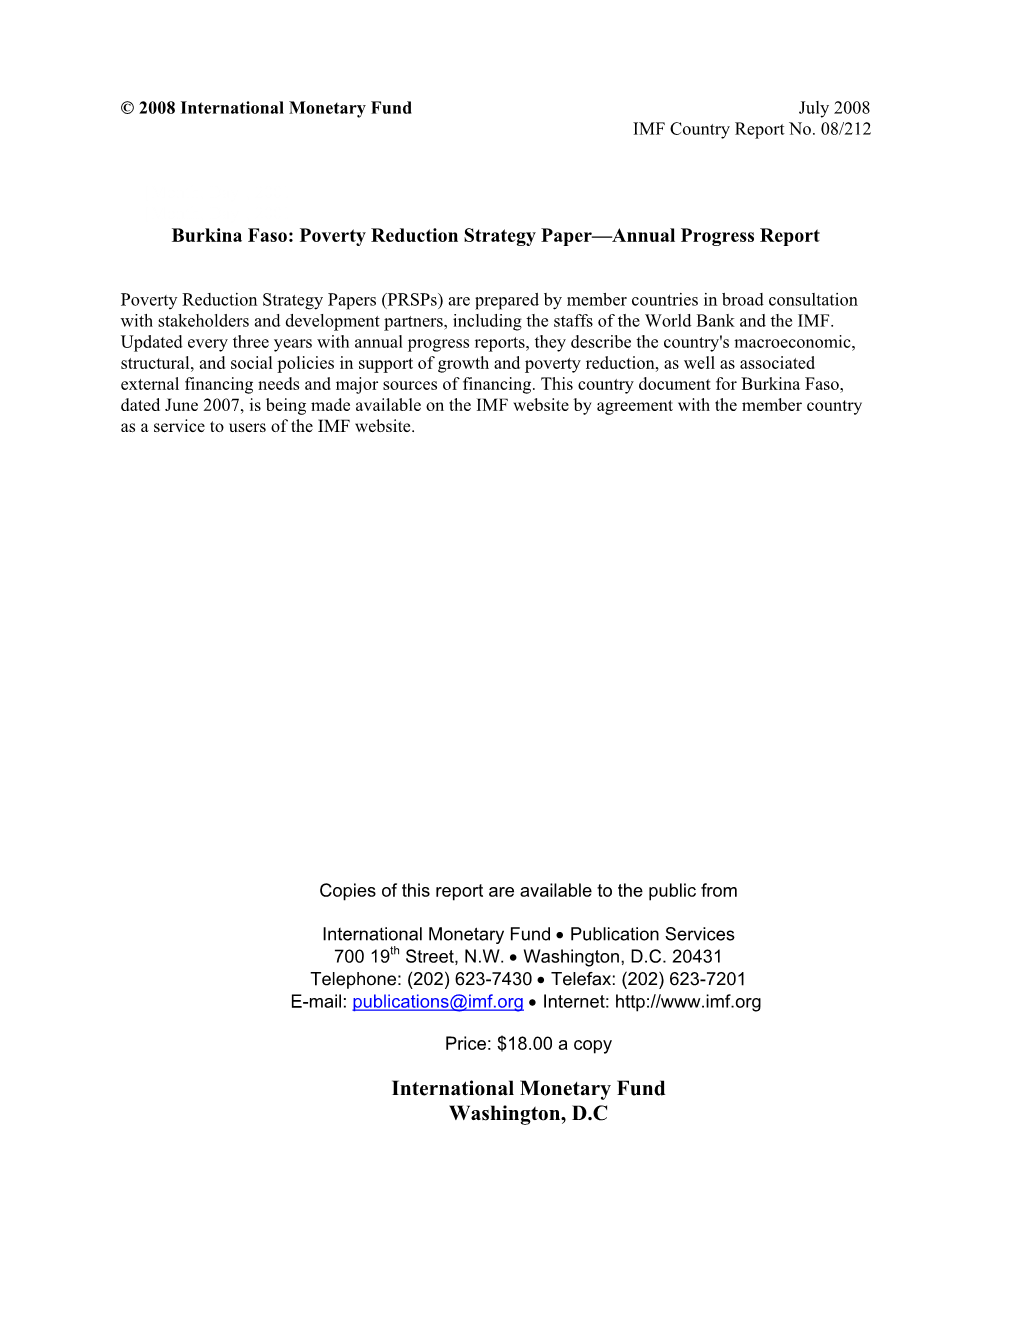 Burkina Faso: Poverty Reduction Strategy Paper—Annual Progress Report